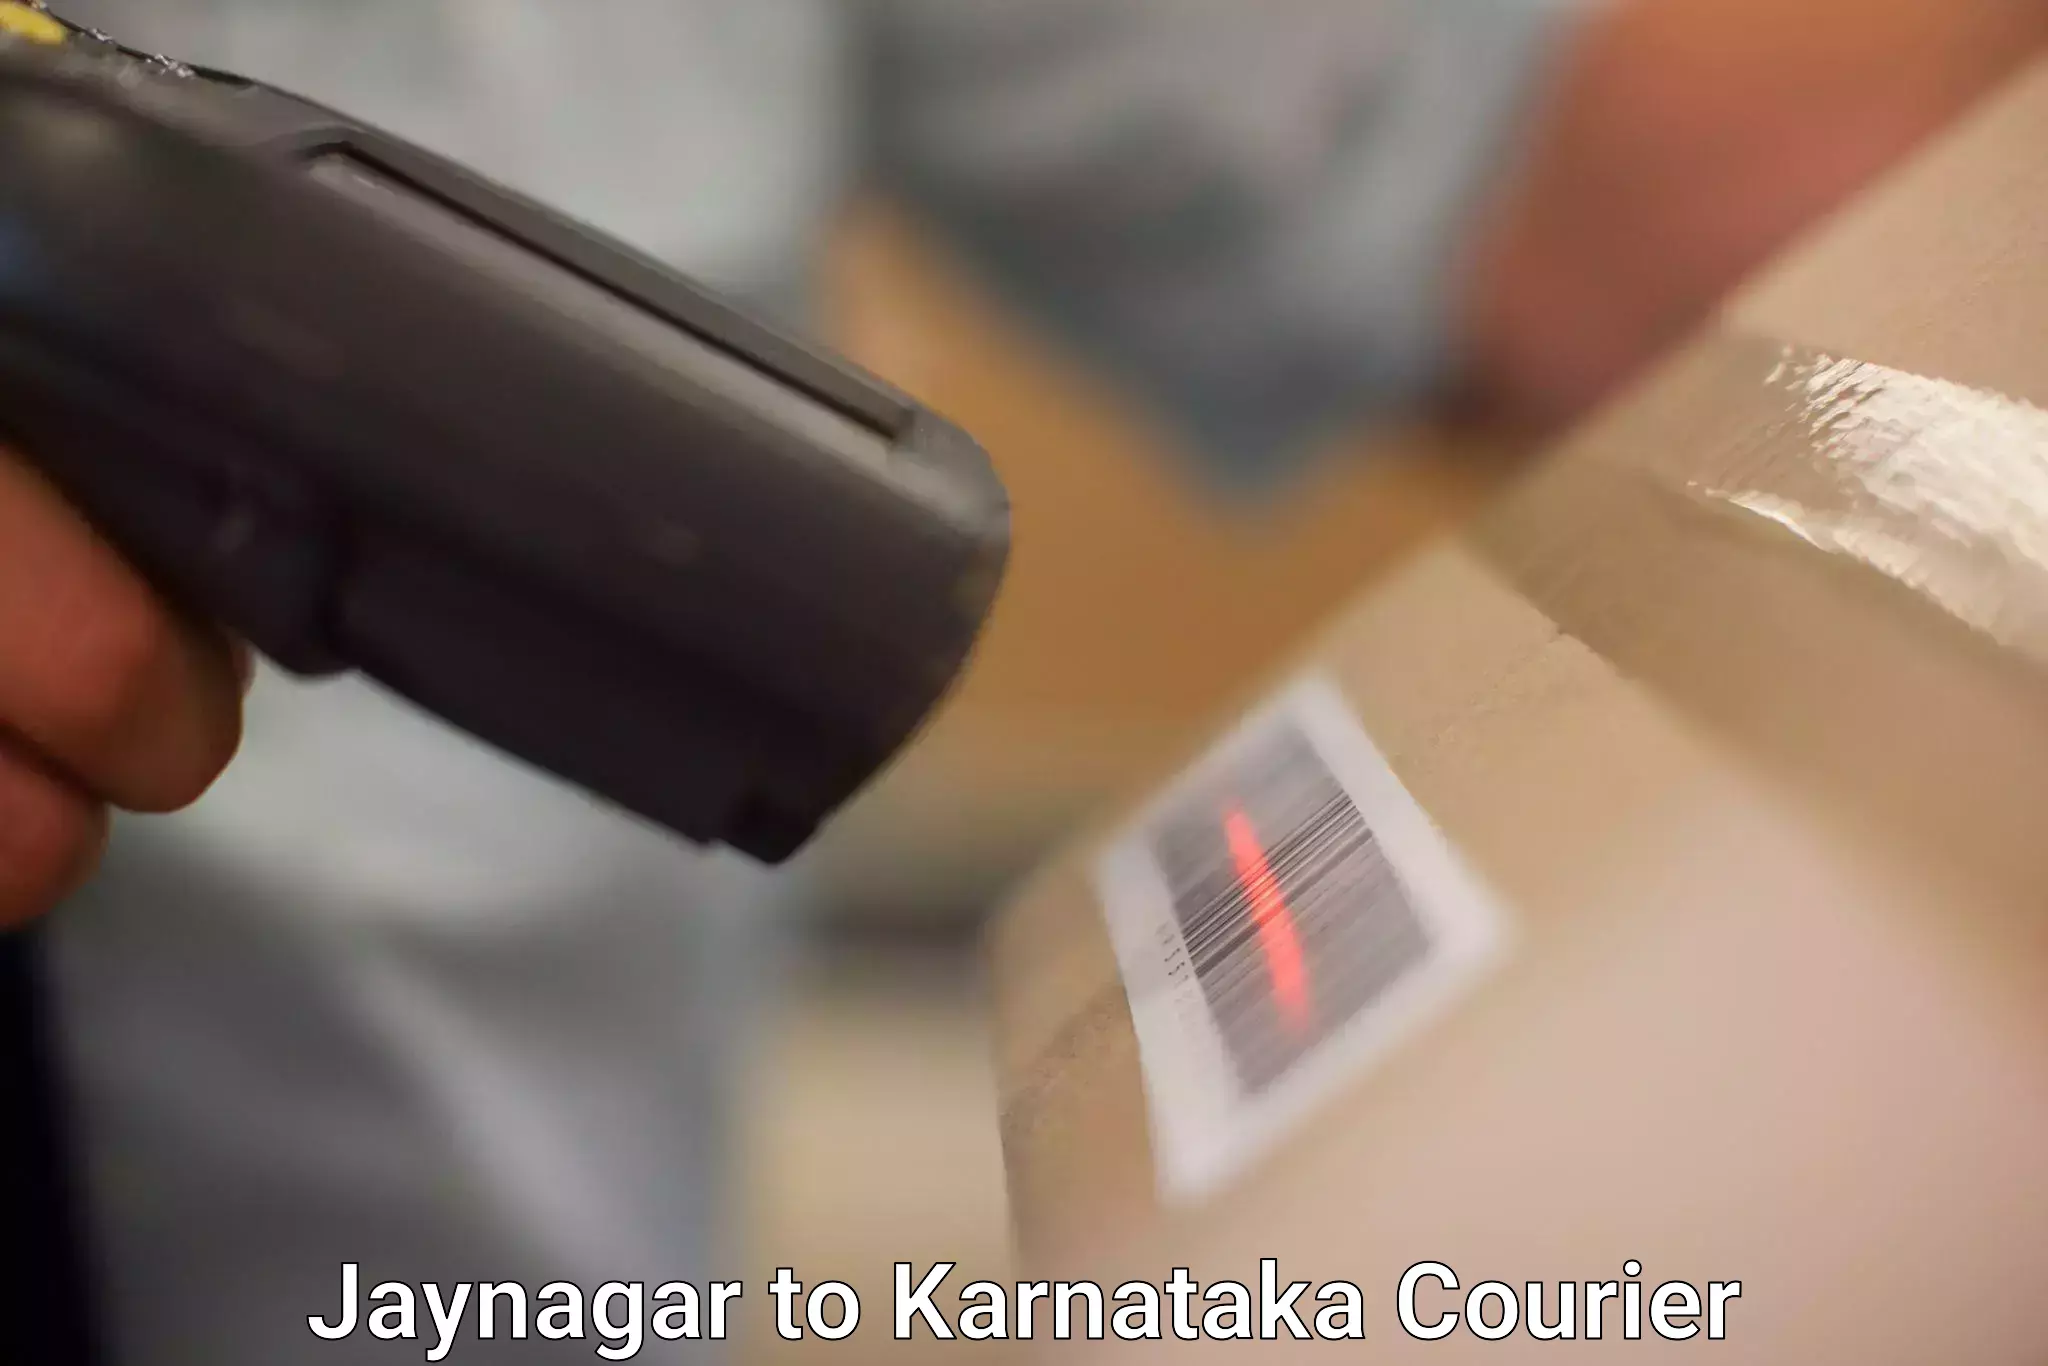 Delivery service partnership Jaynagar to Karnataka